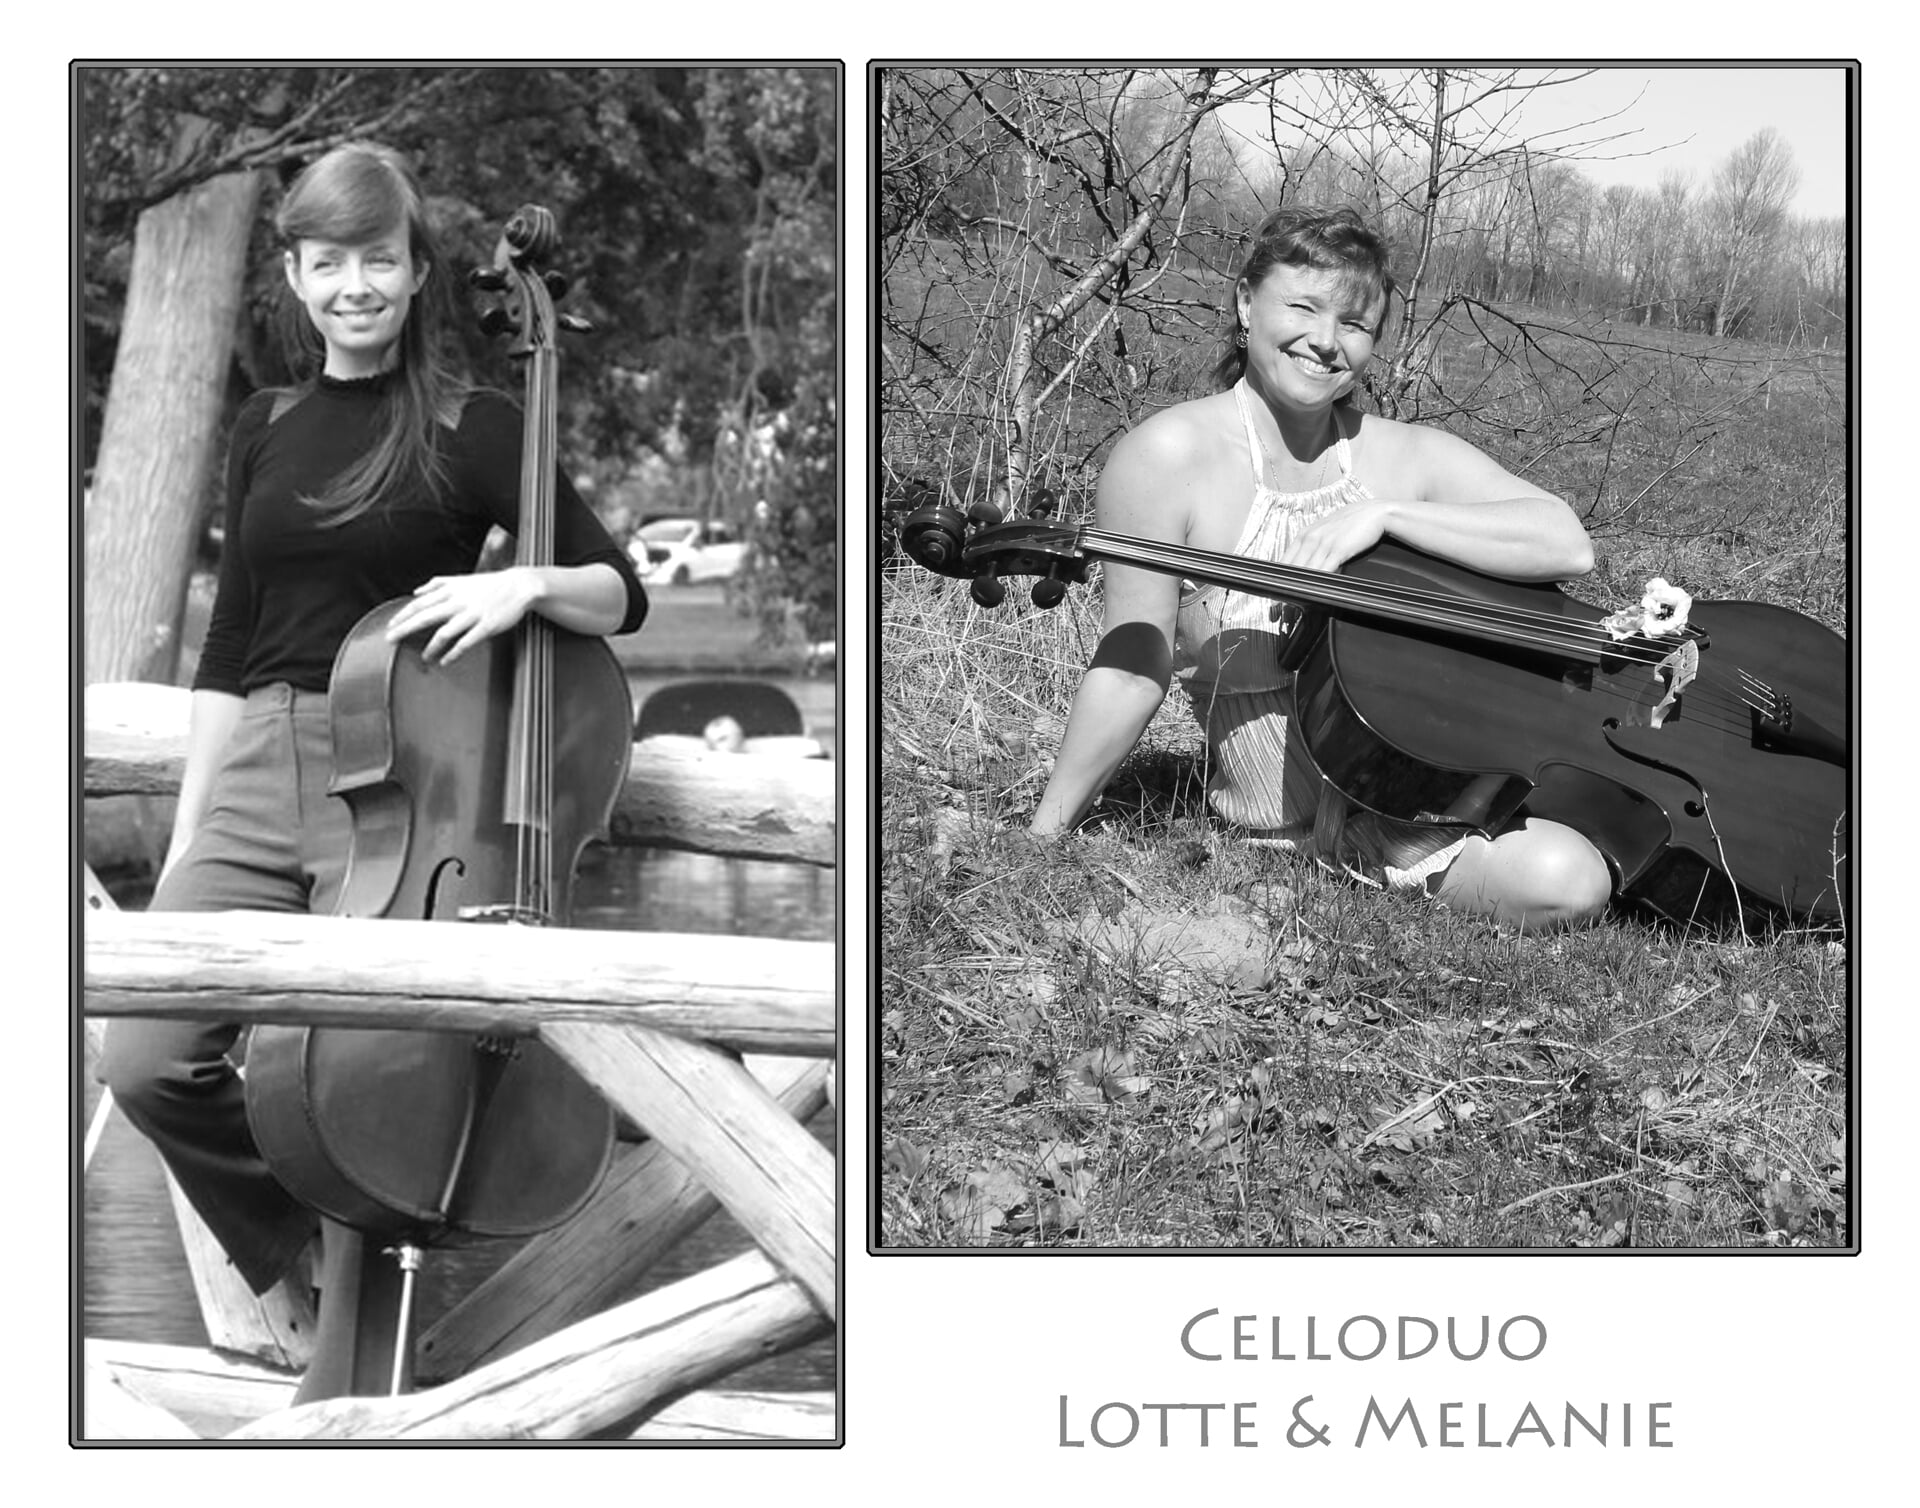 Celloduo Lotte en Melanie.